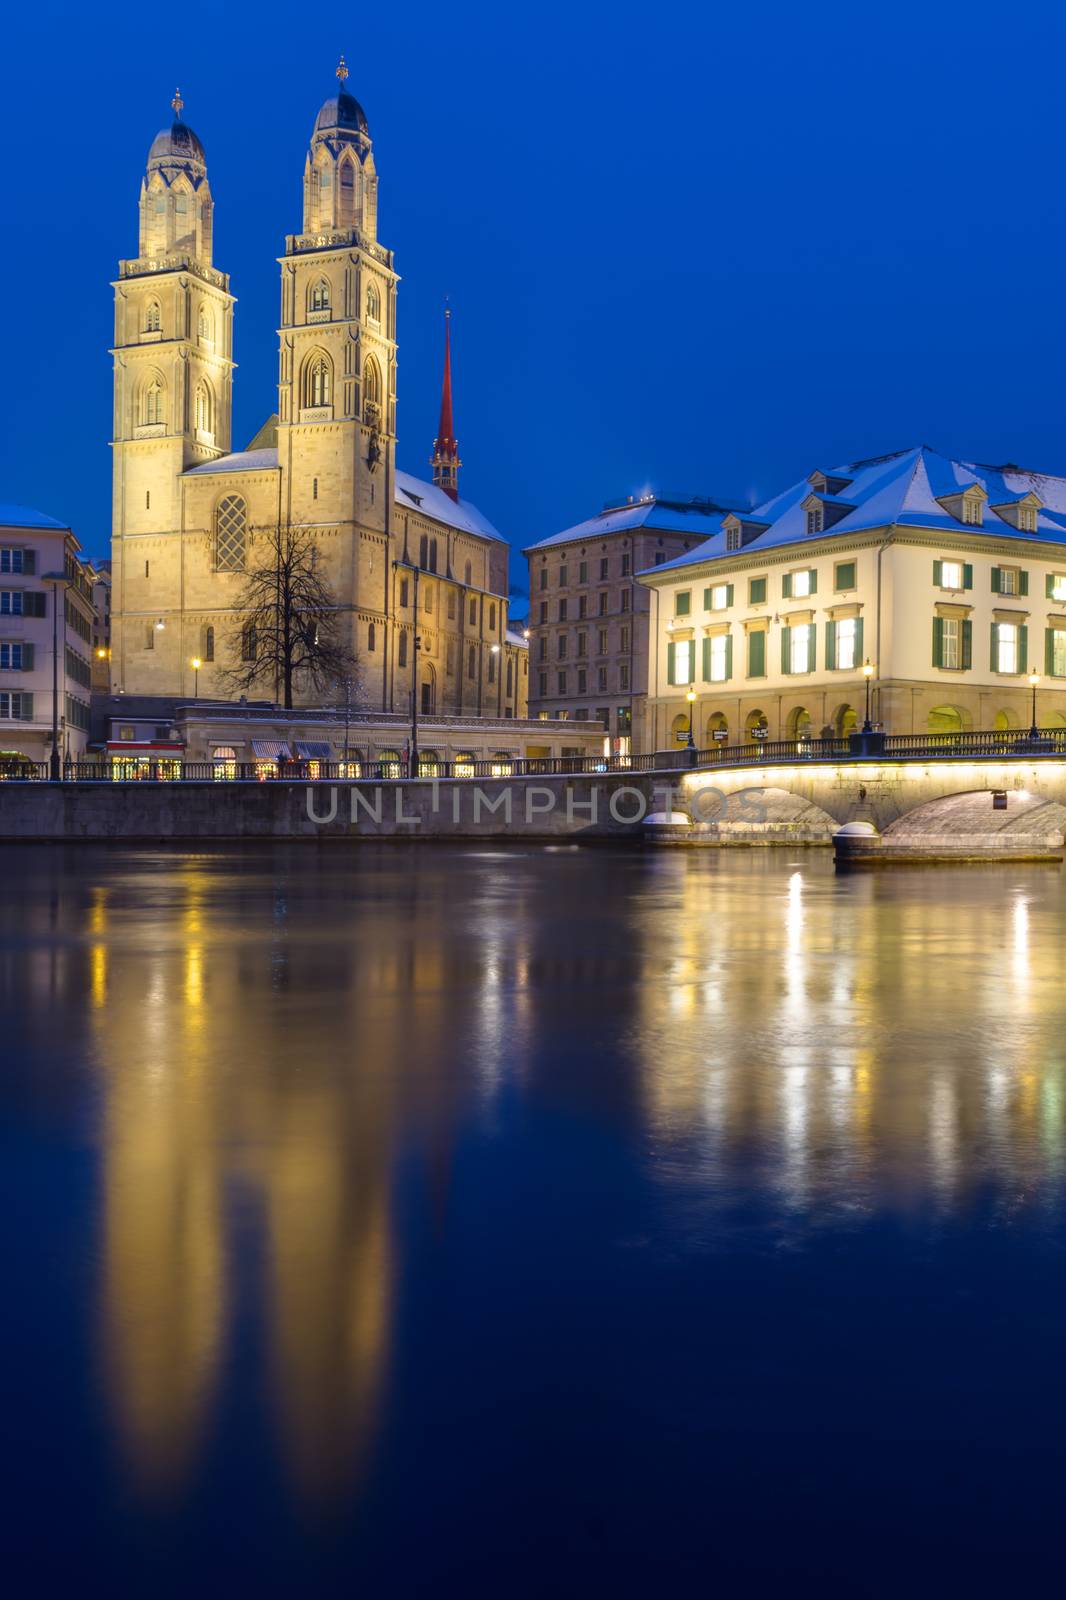 The Minster in Zurich illuminated at night